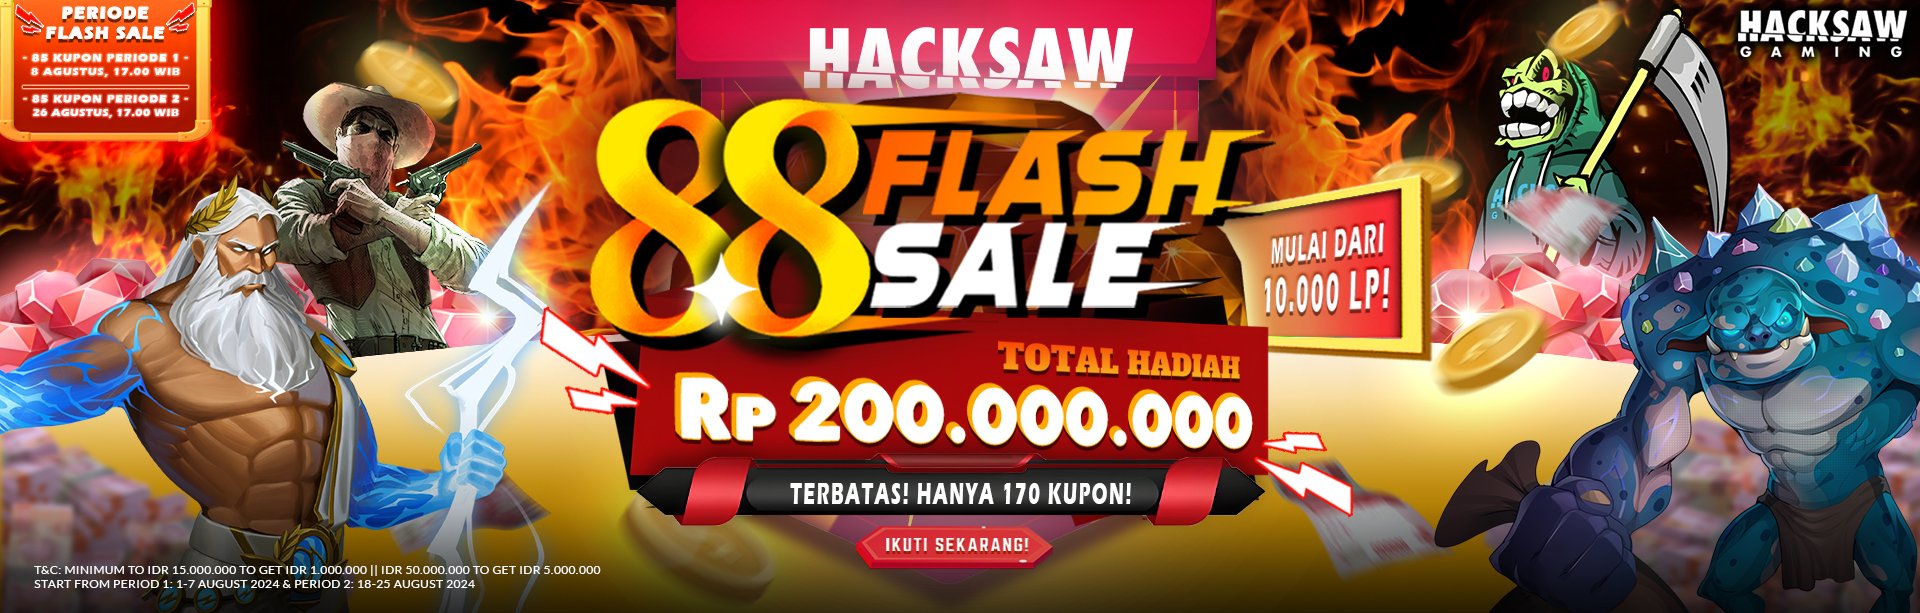 Hacksaw 8.8 Flash Sale